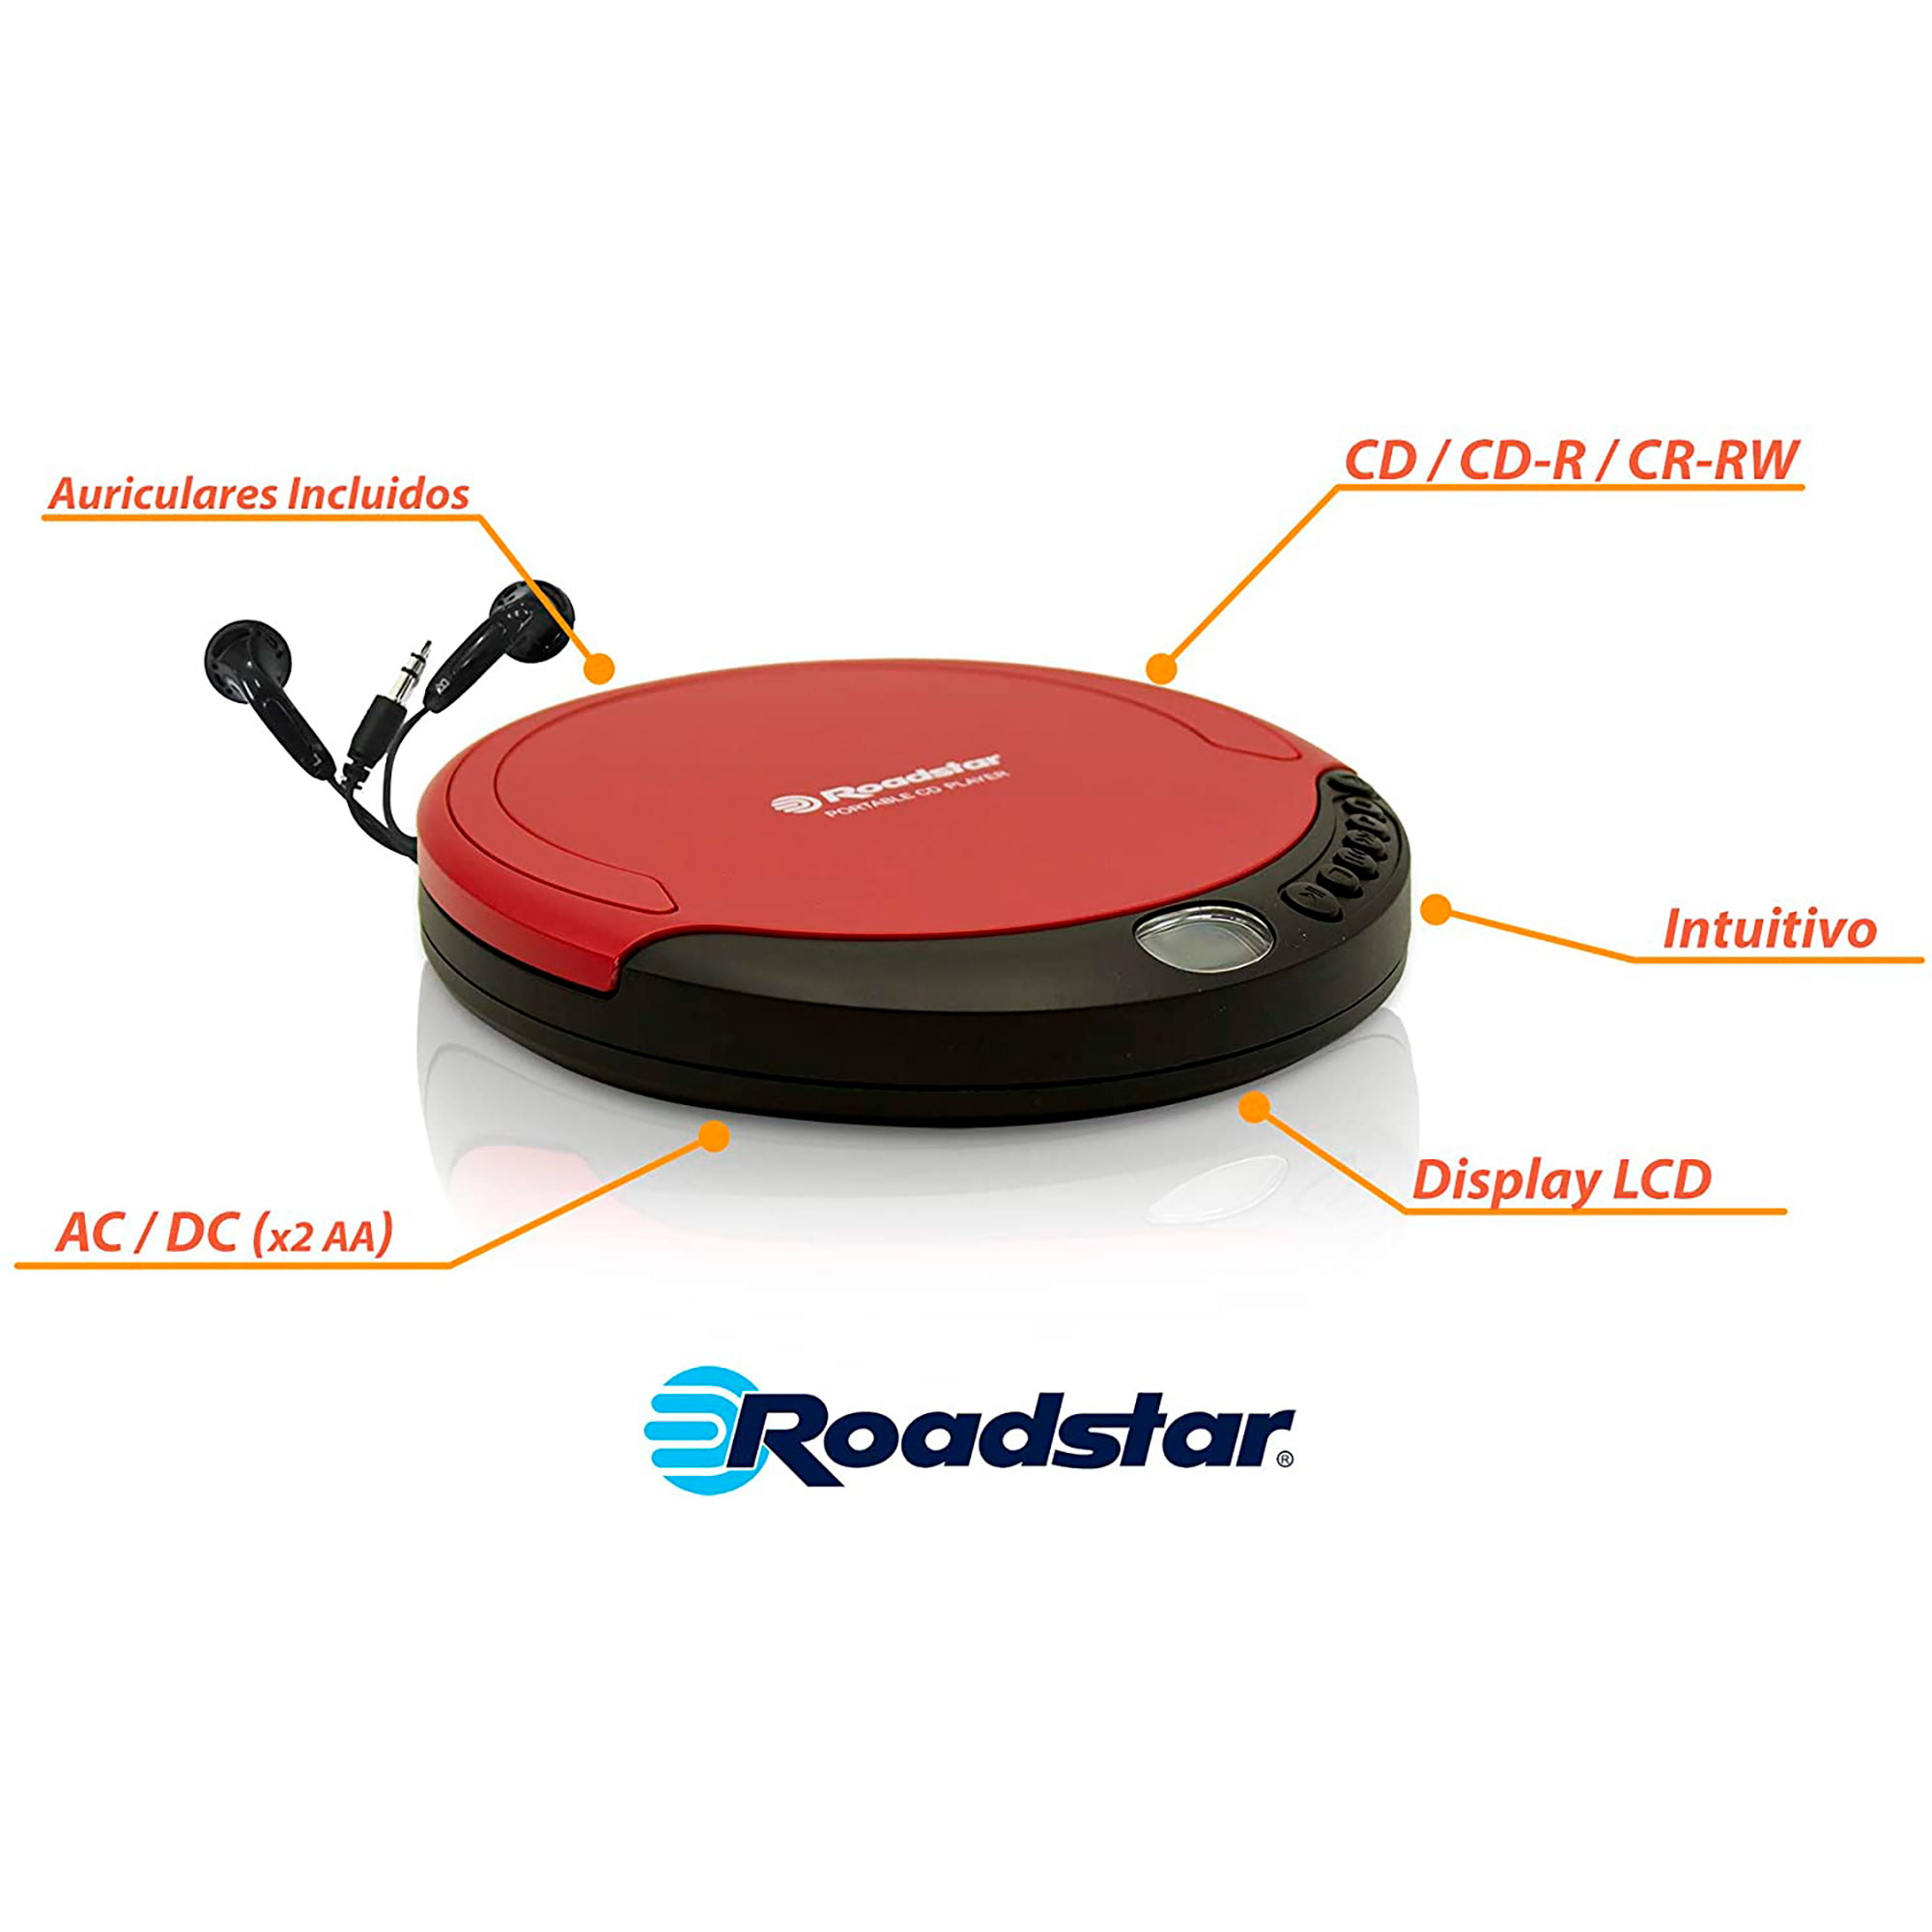 PCD435CD Tragbarer ROADSTAR Rot Player, CD